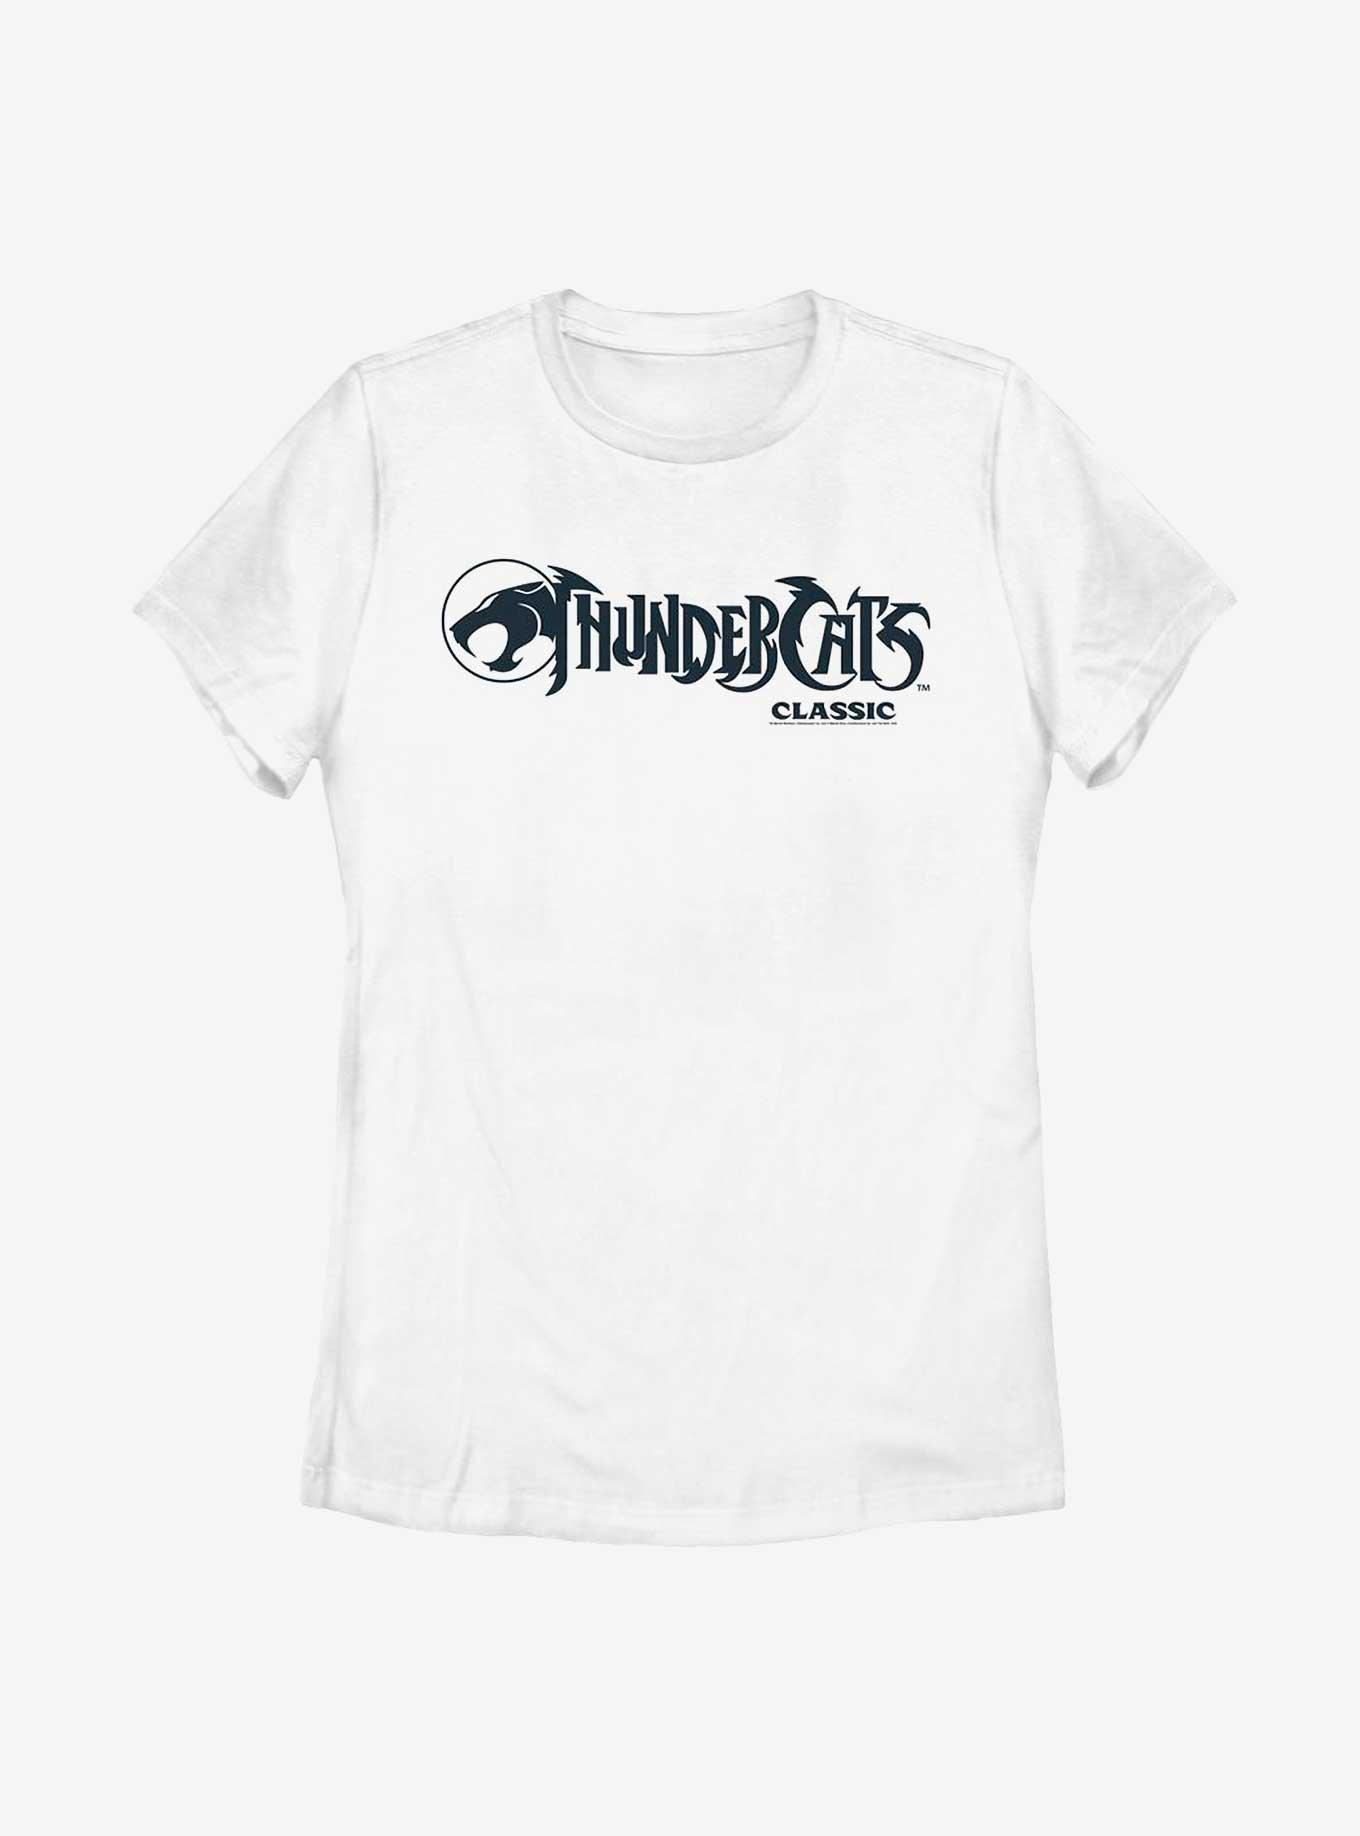 Thundercats Logo Black And White Womens T-Shirt, WHITE, hi-res